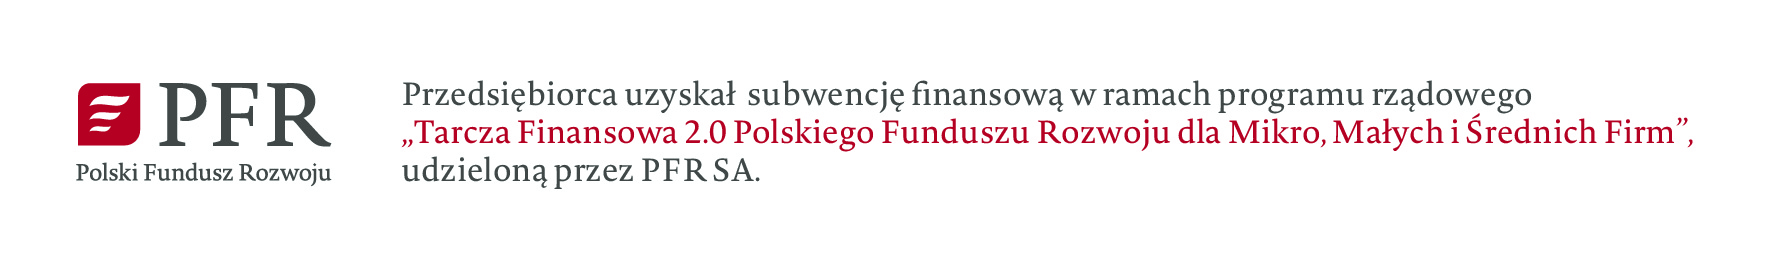 Polski Fundusz Rozwoju baner